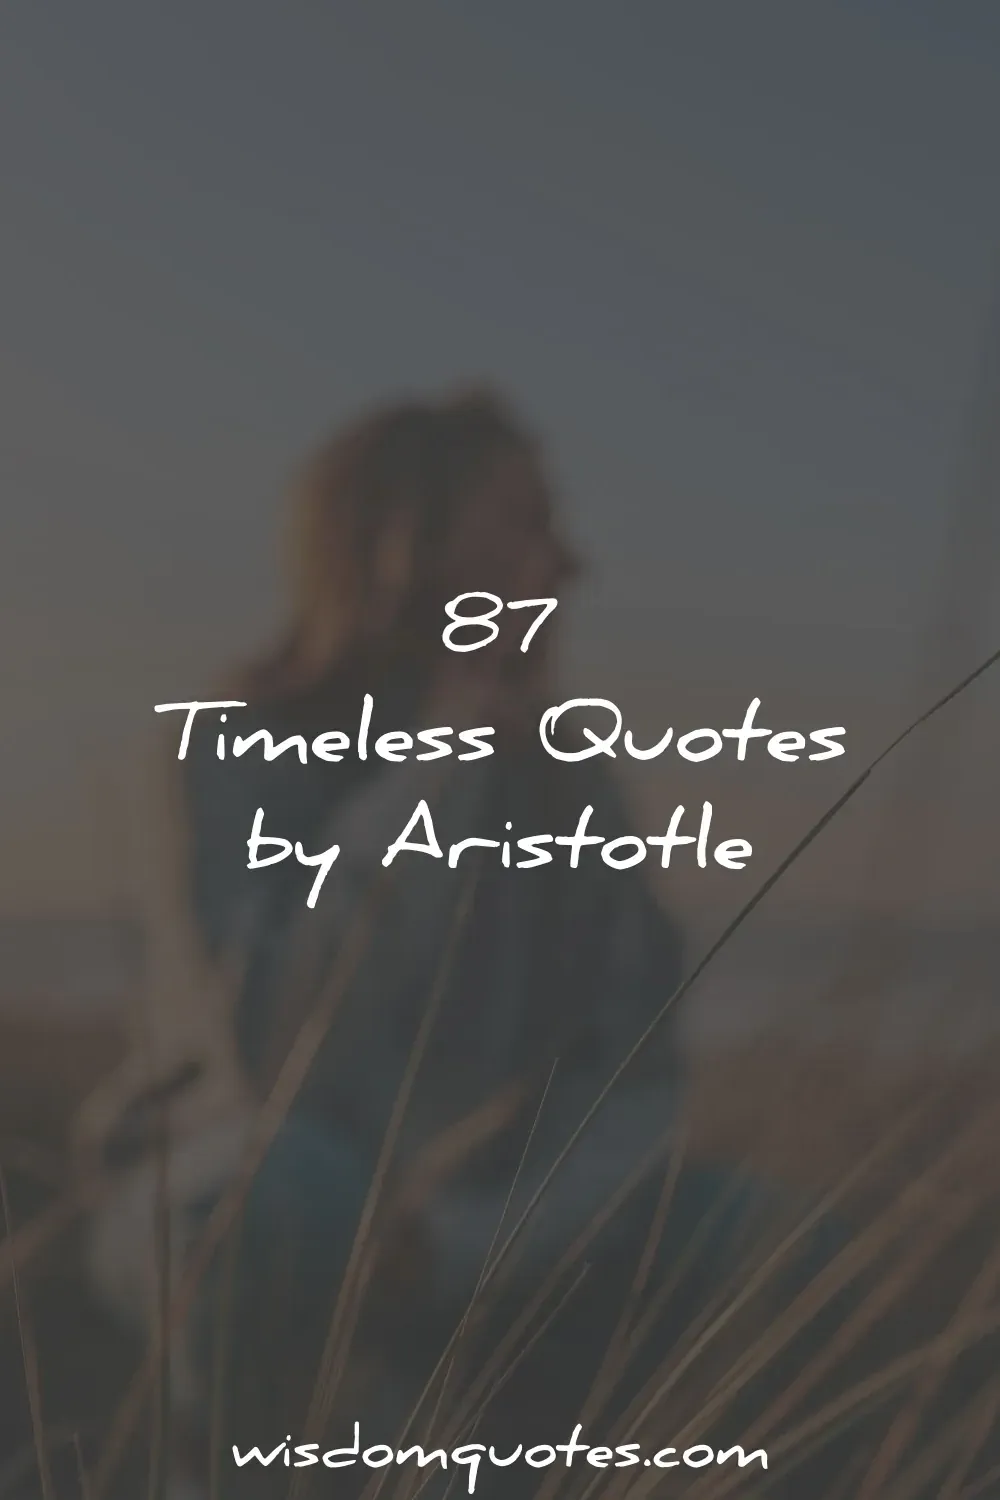 aristotle quotes timeless pinterest wisdom